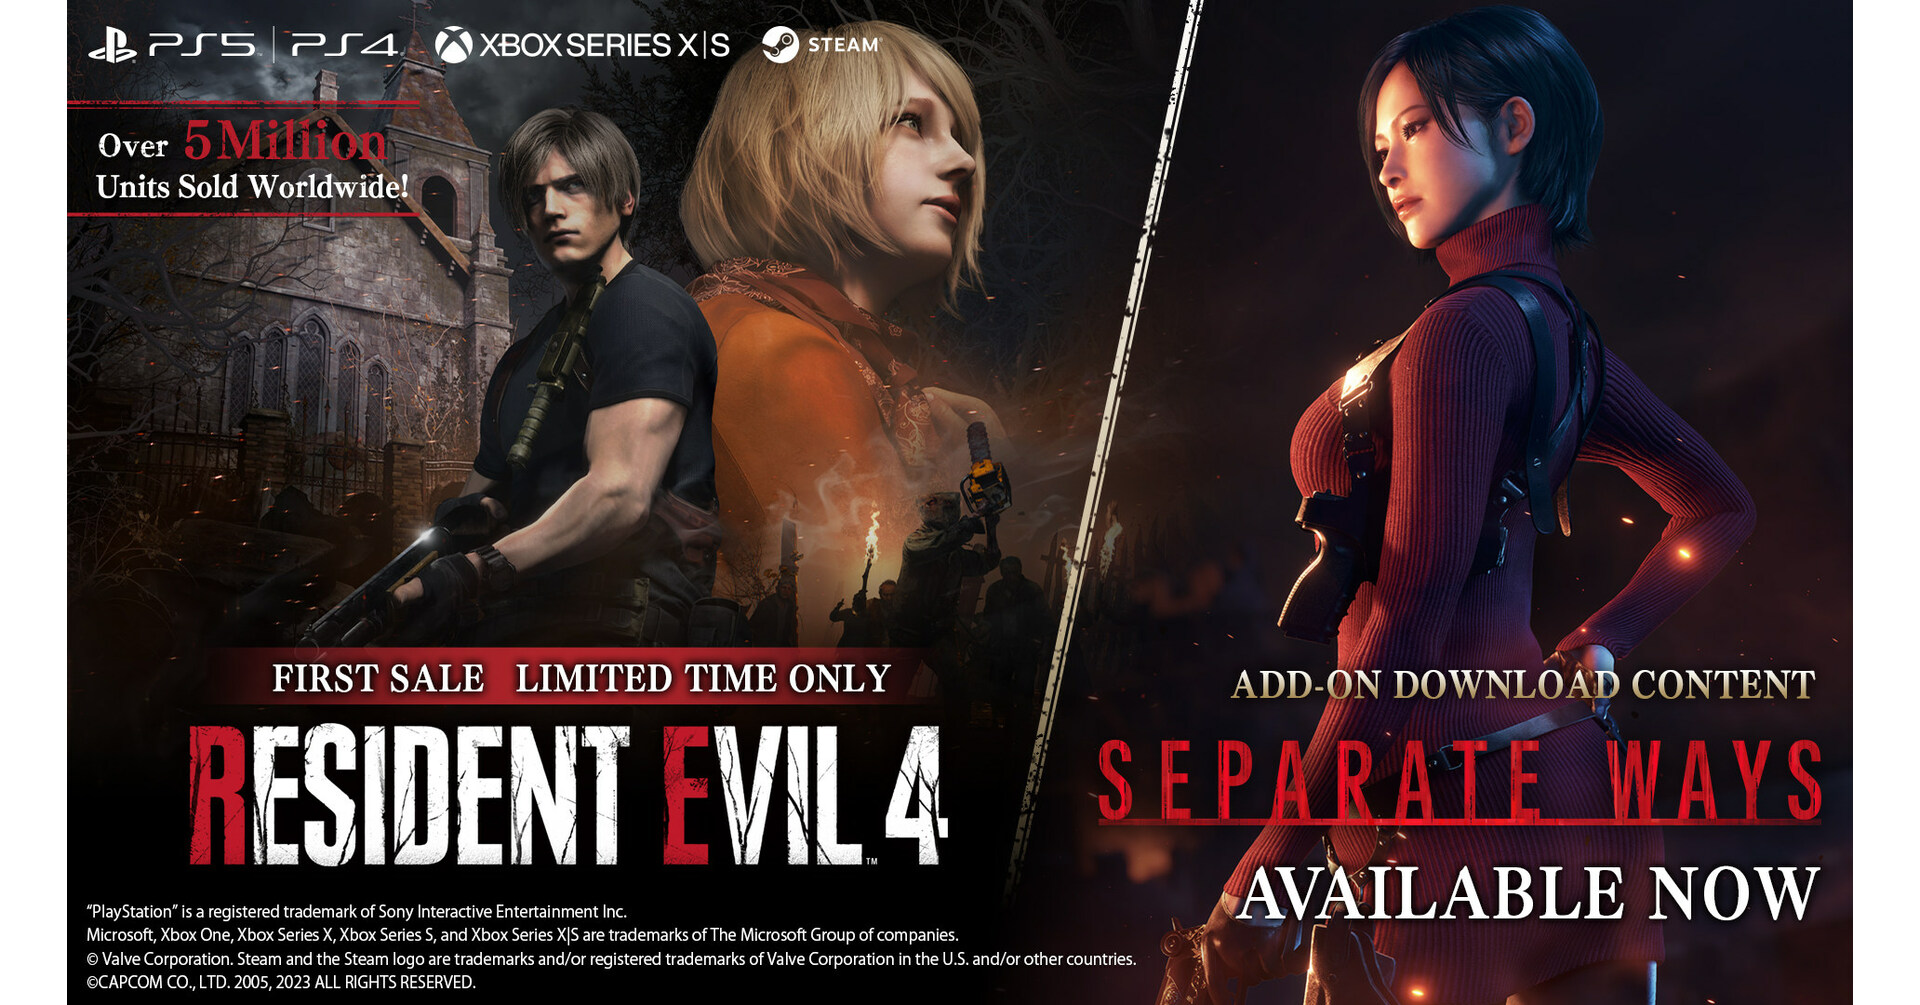 Resident Evil 4 Remake: Release date, trailers, platforms & more